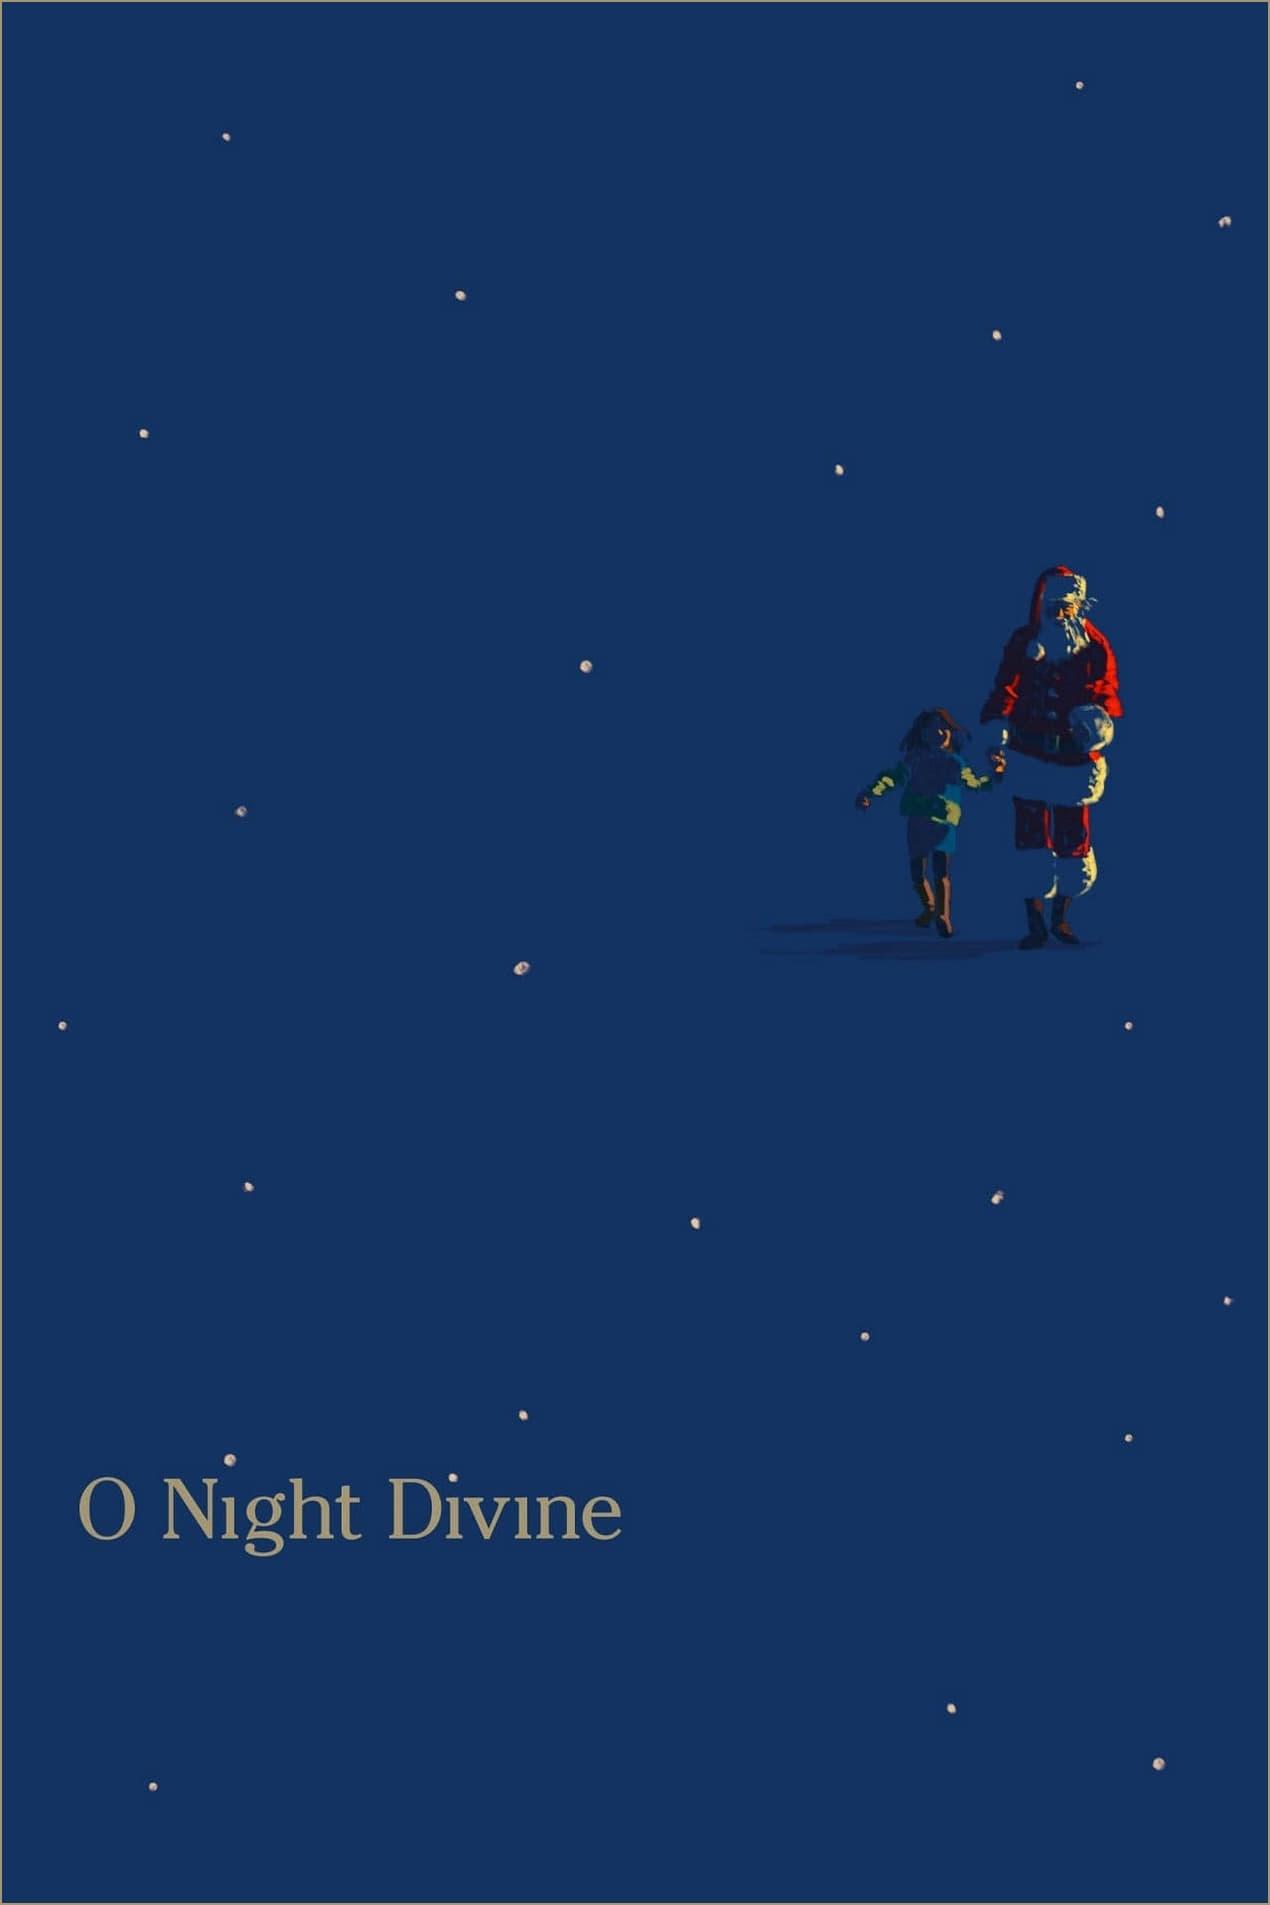 O Night Divine poster